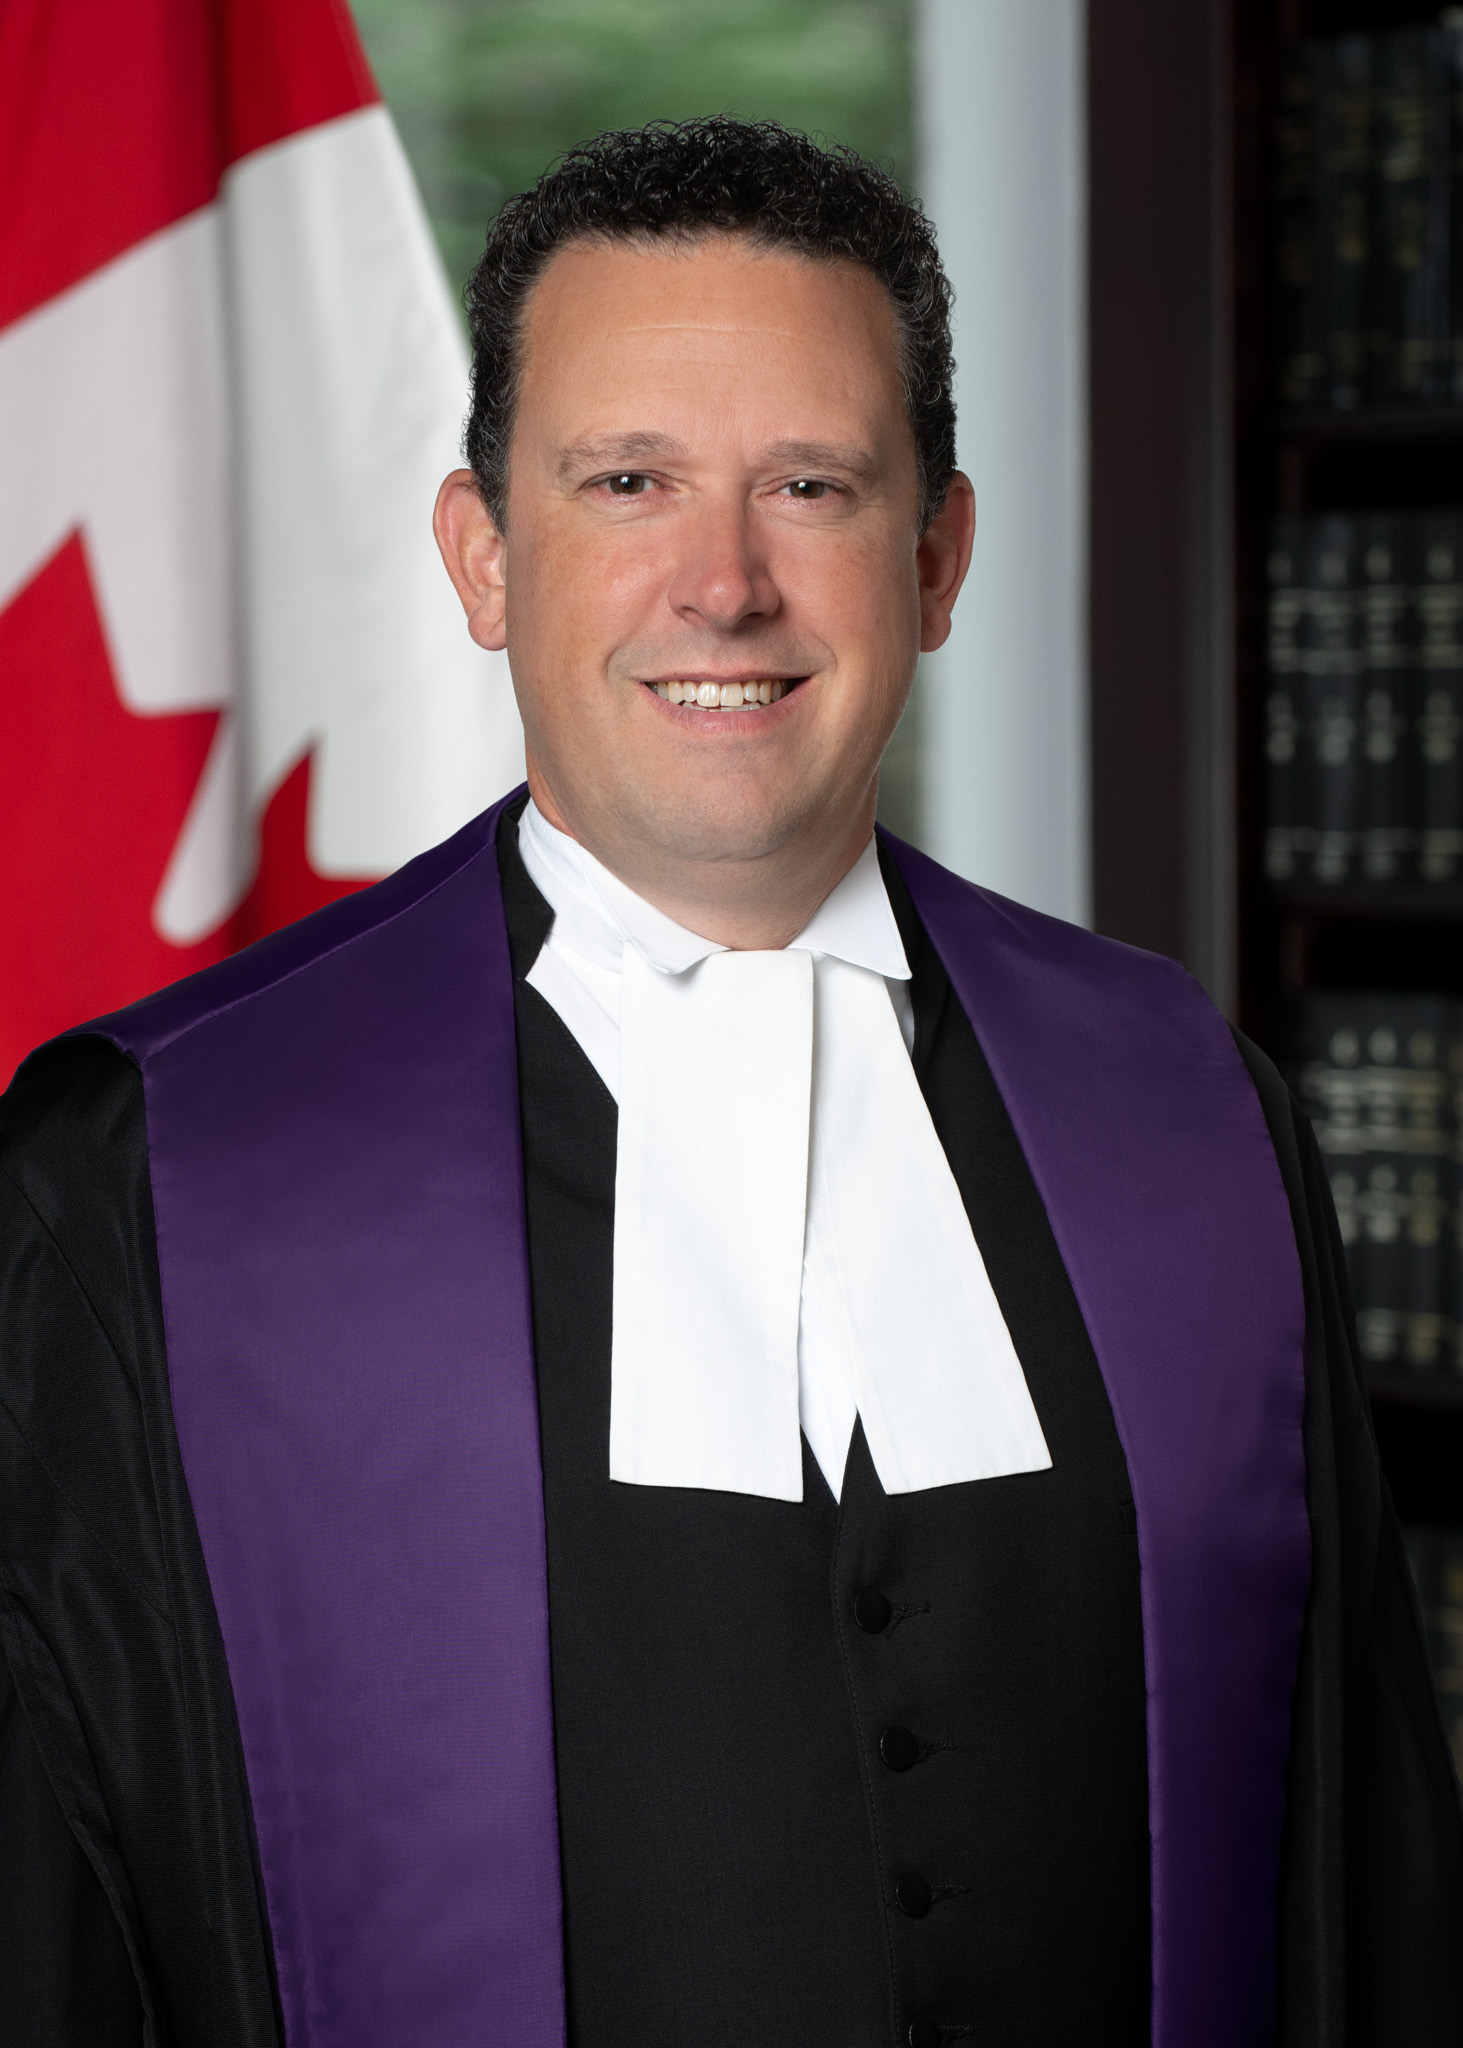 image: The Honourable David E. Graham